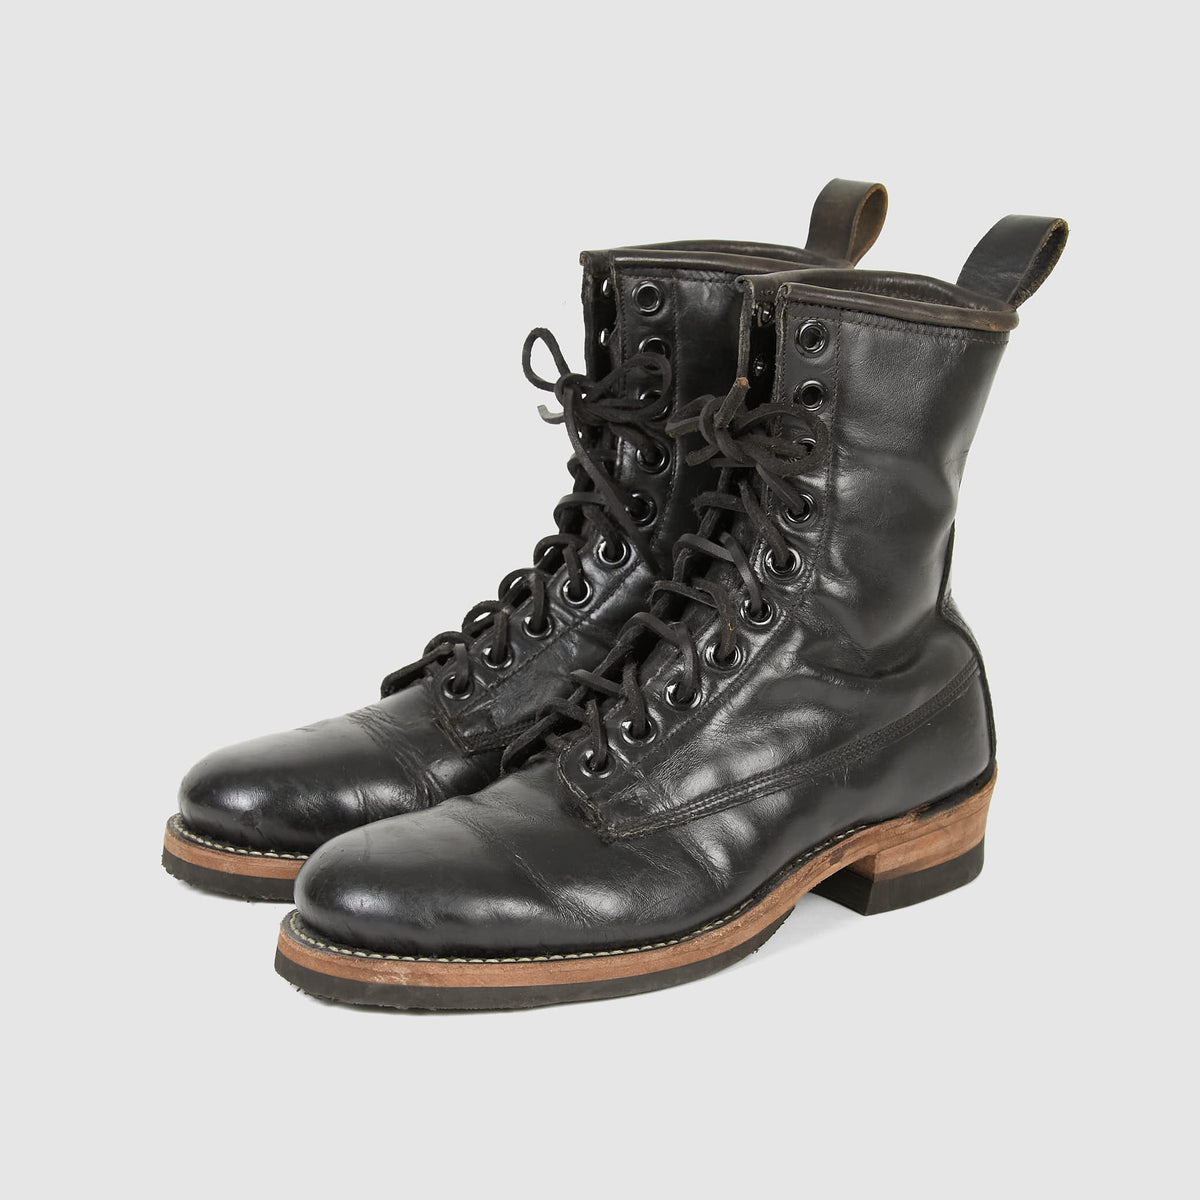 Irregular x DeeCee Style Vintage Military Boots